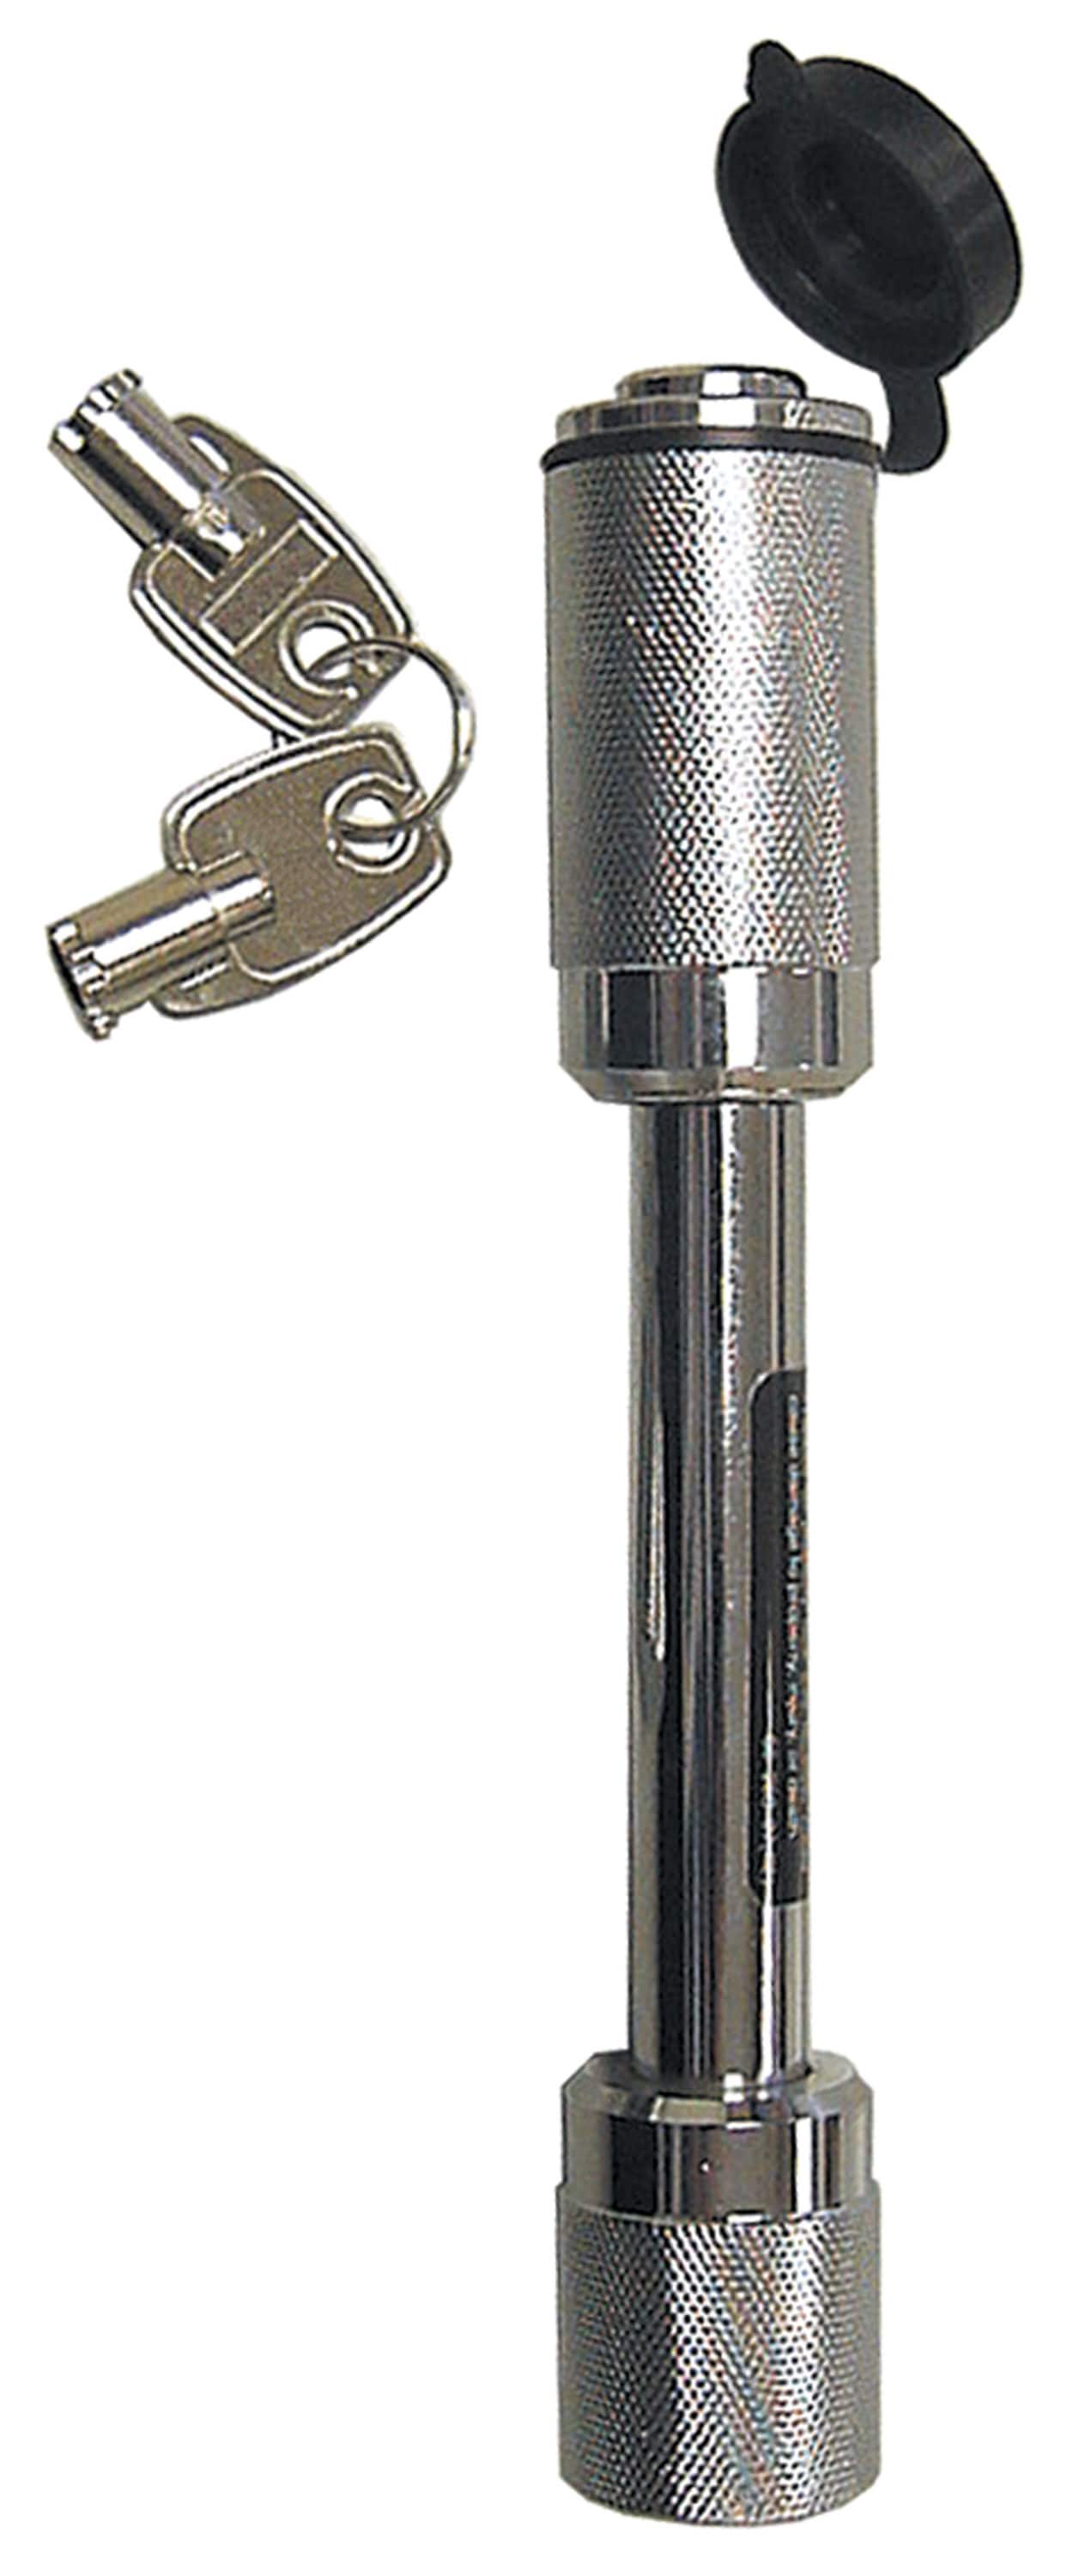 Vehiclex Hitch Receiver Pin Lock - 5/8 Pin for Class III, IV Hitch 2